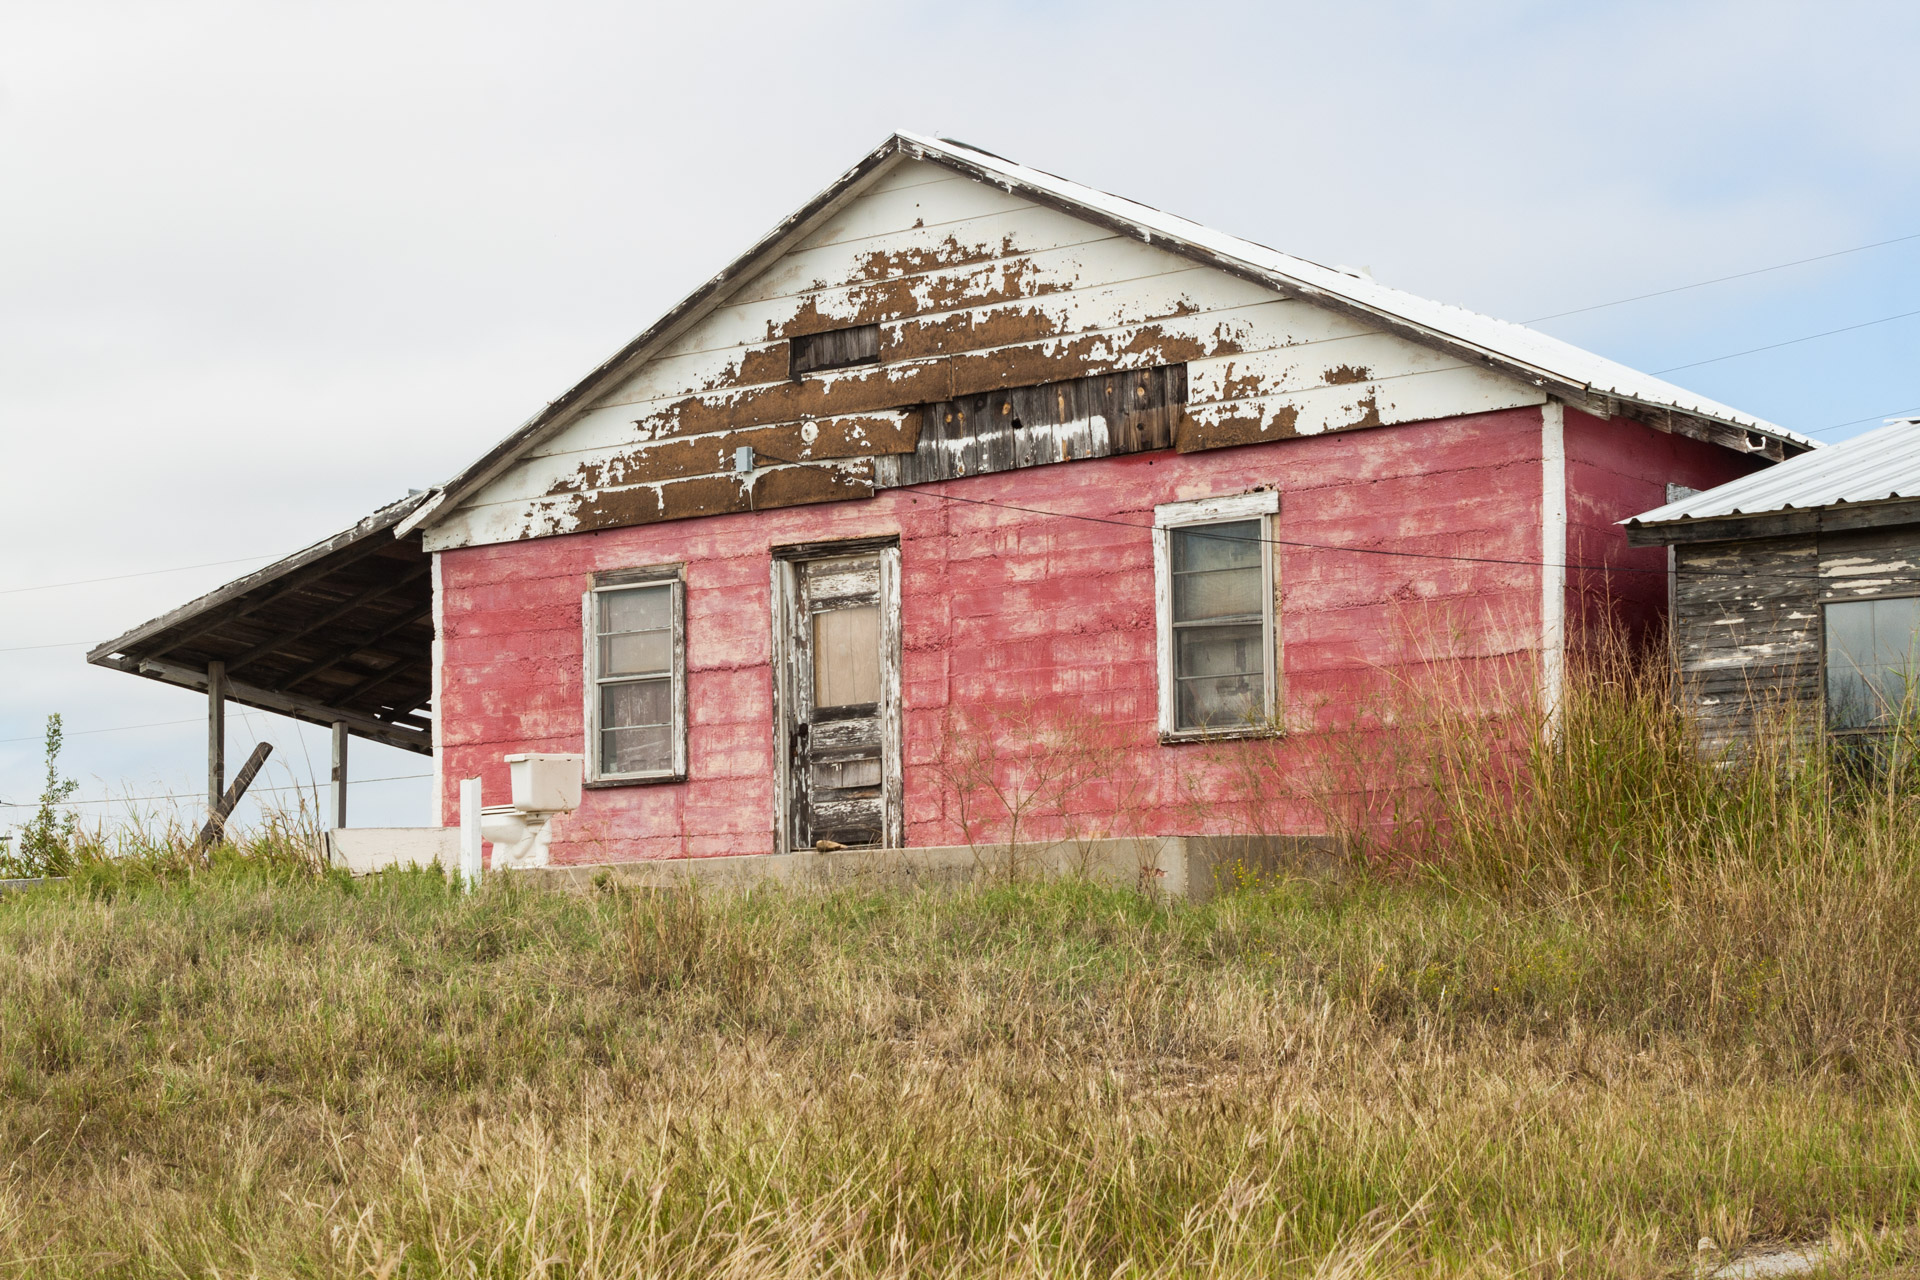 Bangs, Texas - The Pink House (side angle)